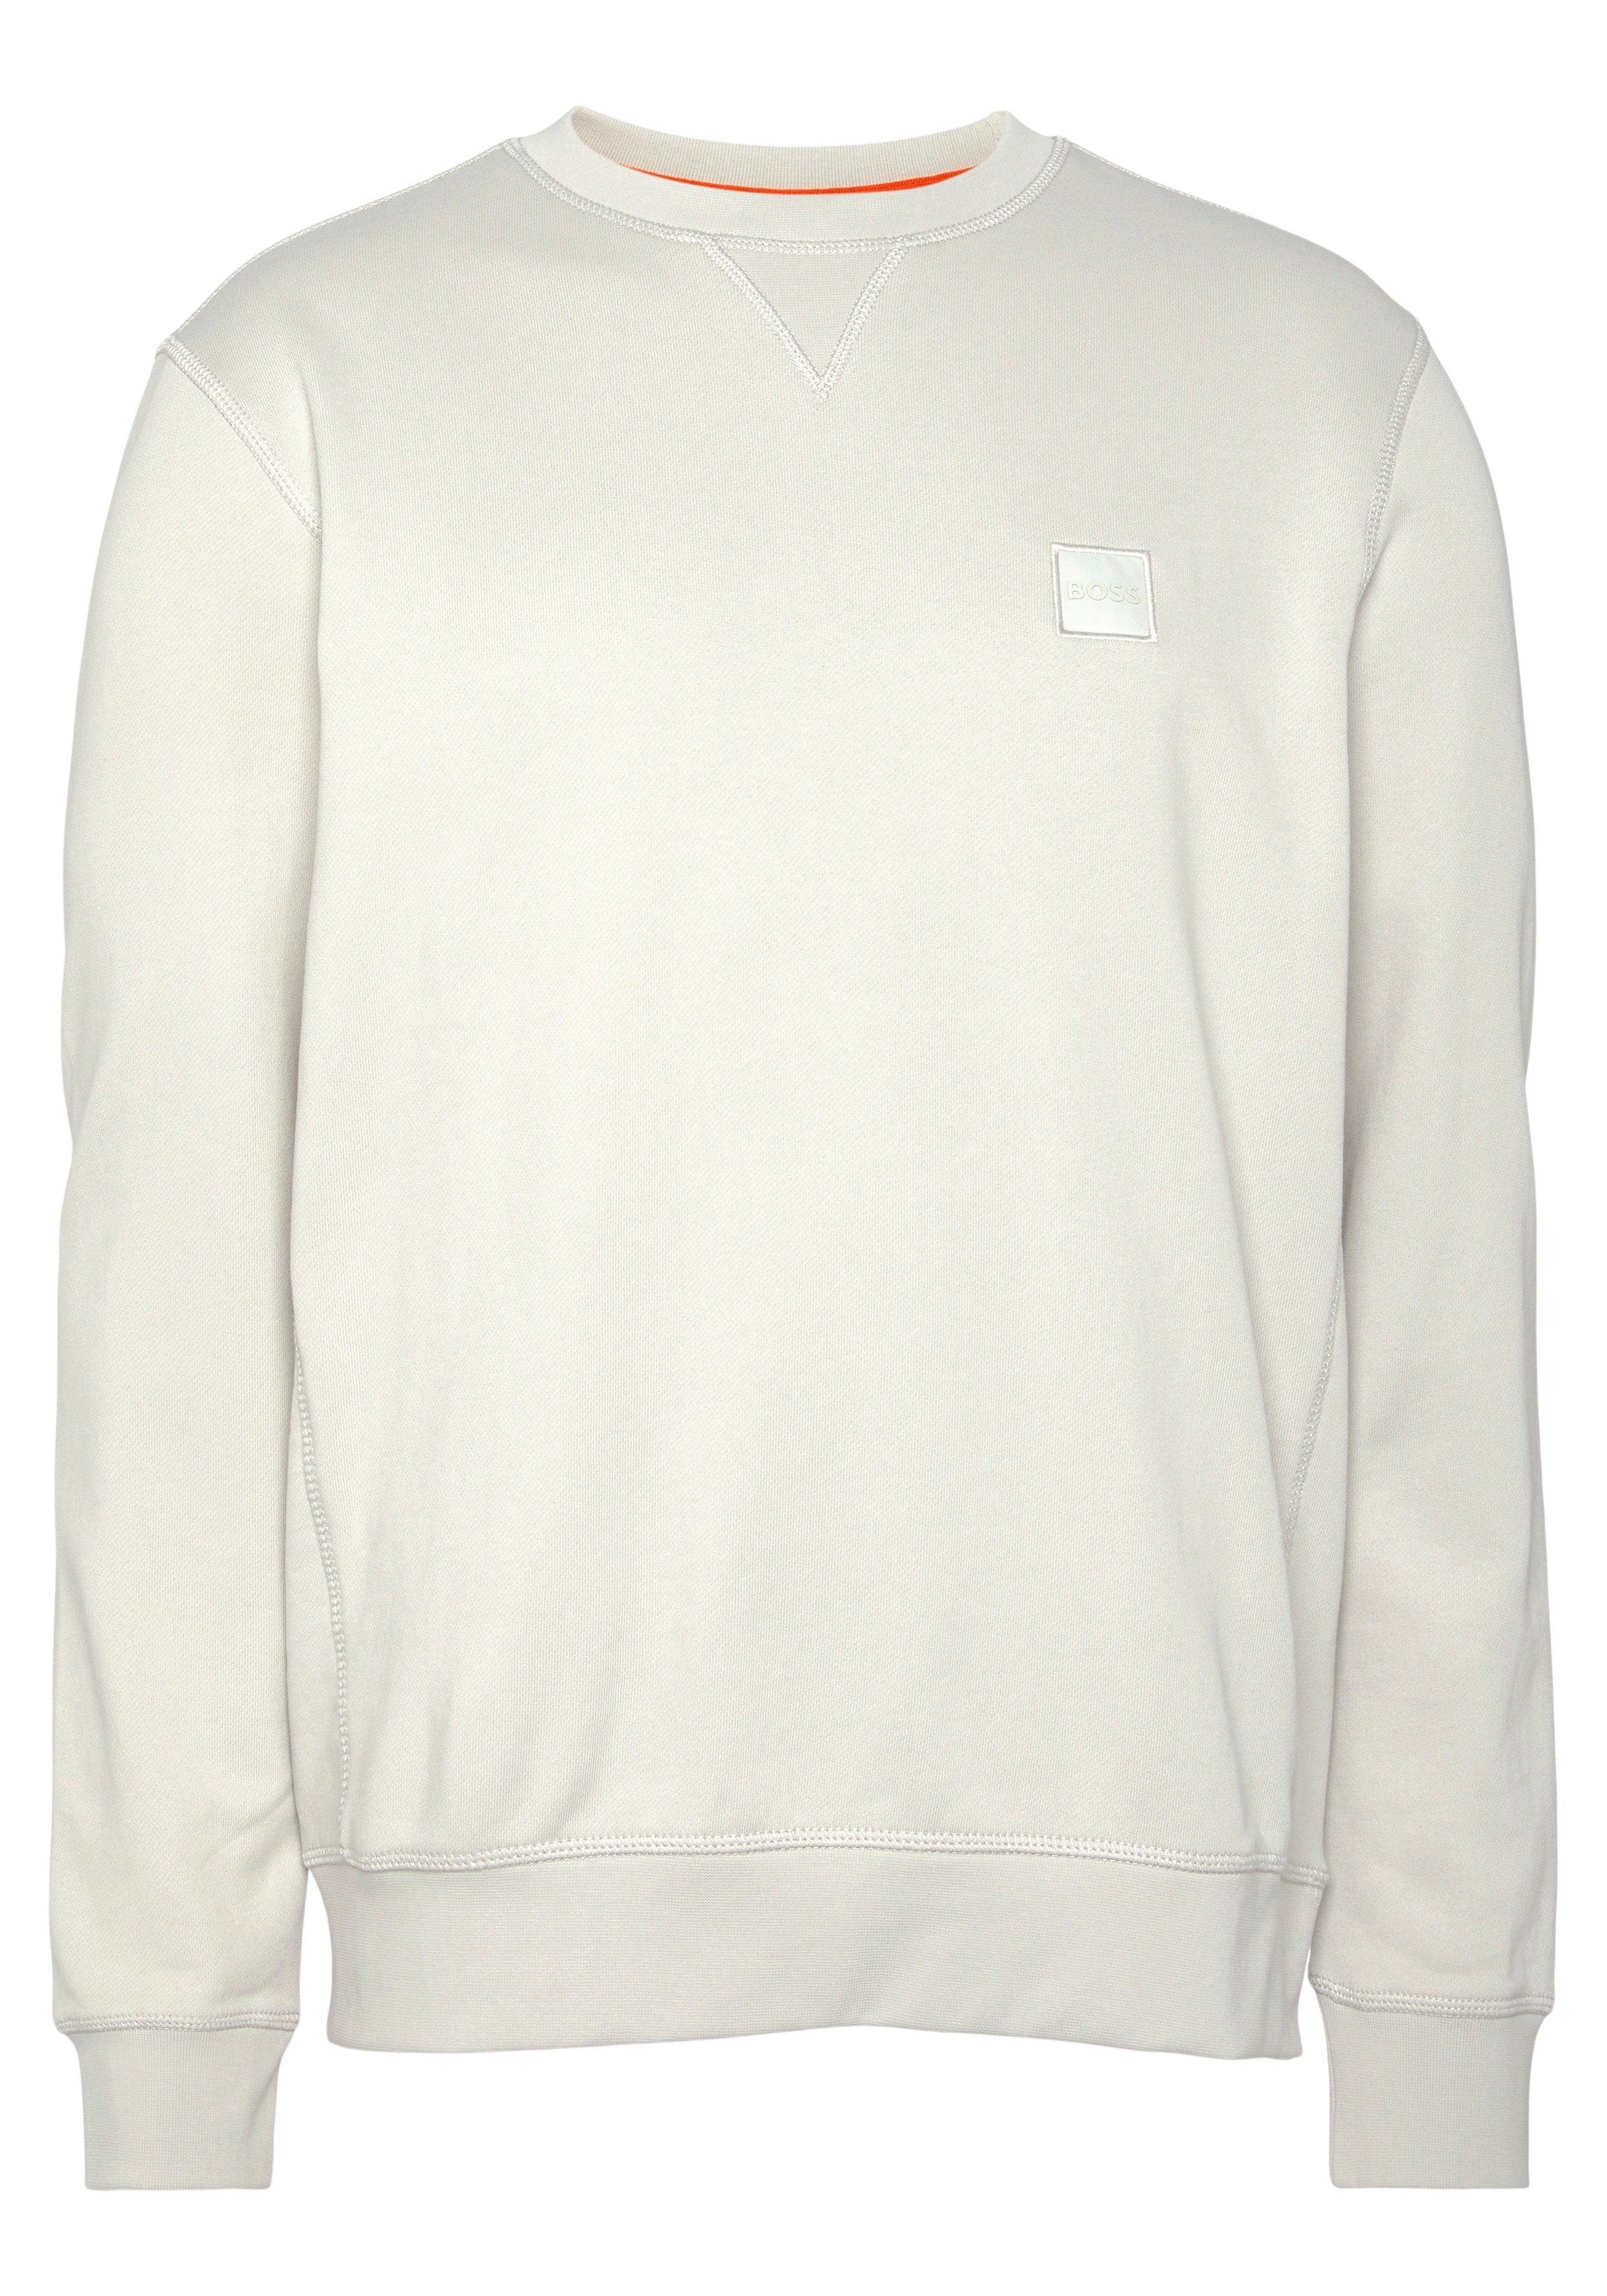 BOSS ORANGE mit Logo Sweatshirt Grey057 Light/Pastel Westart BOSS aufgesticktem